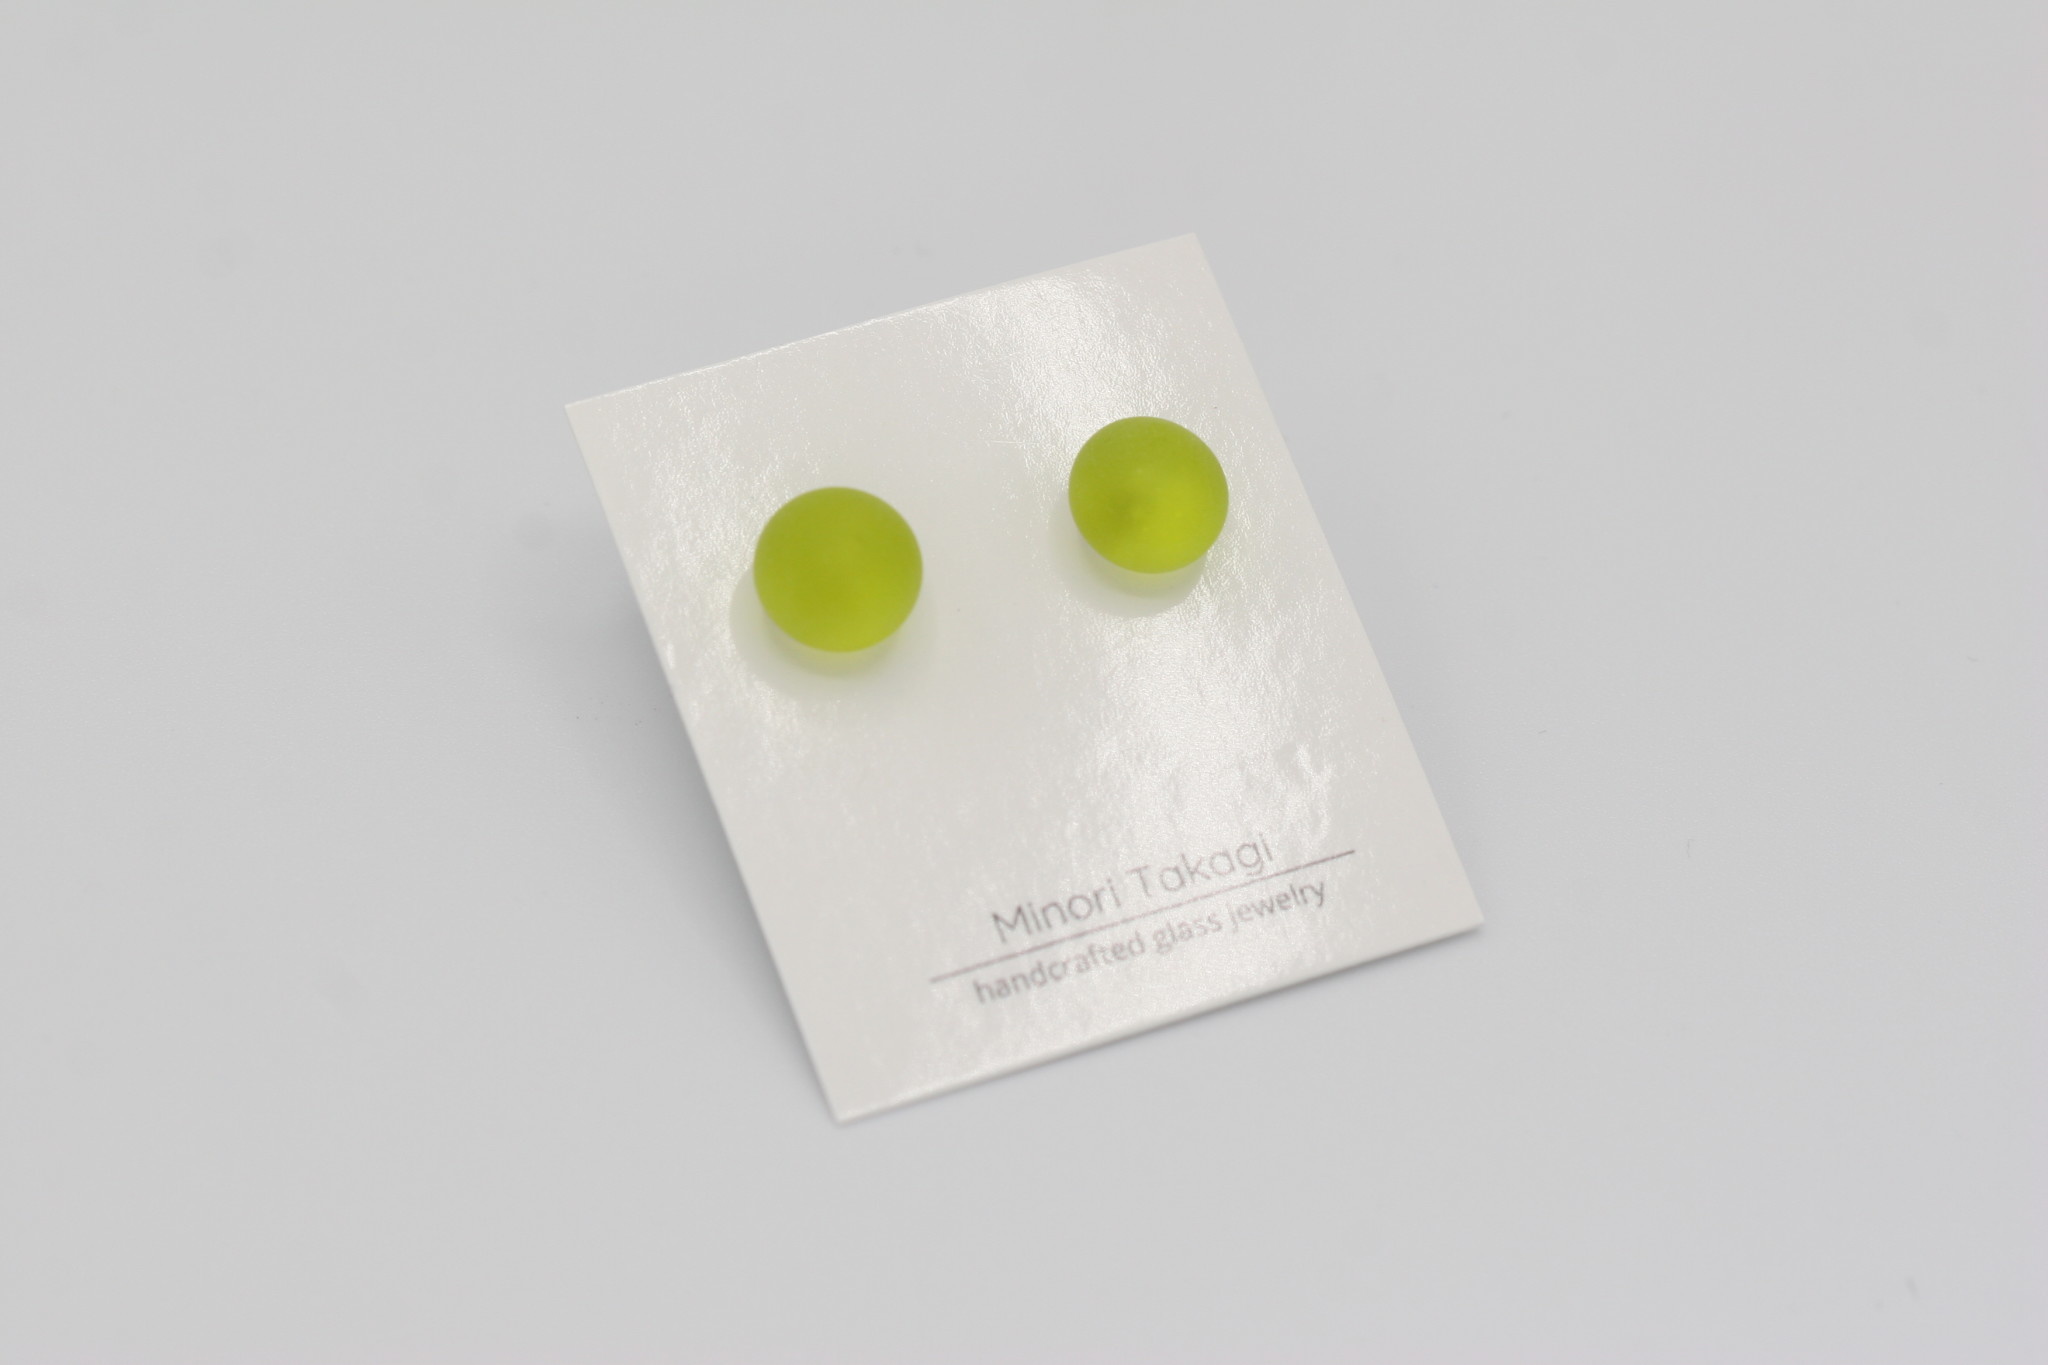 Minori Takagi Earrings - Glass Dot Studs